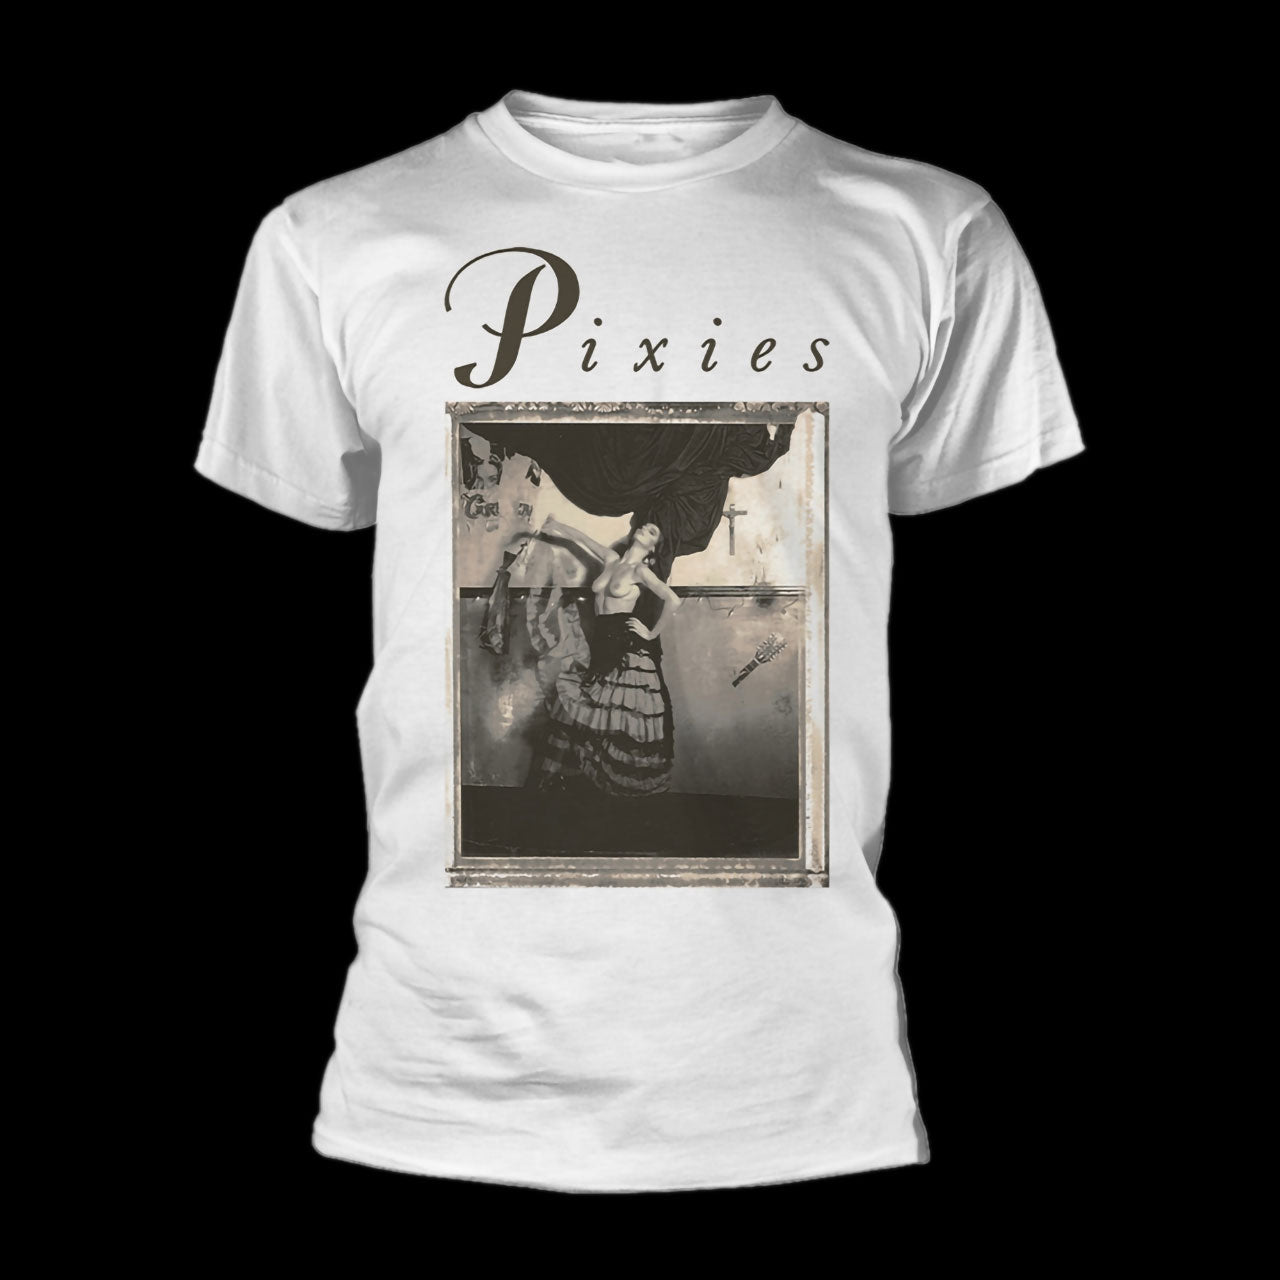 Pixies - Surfer Rosa (T-Shirt)